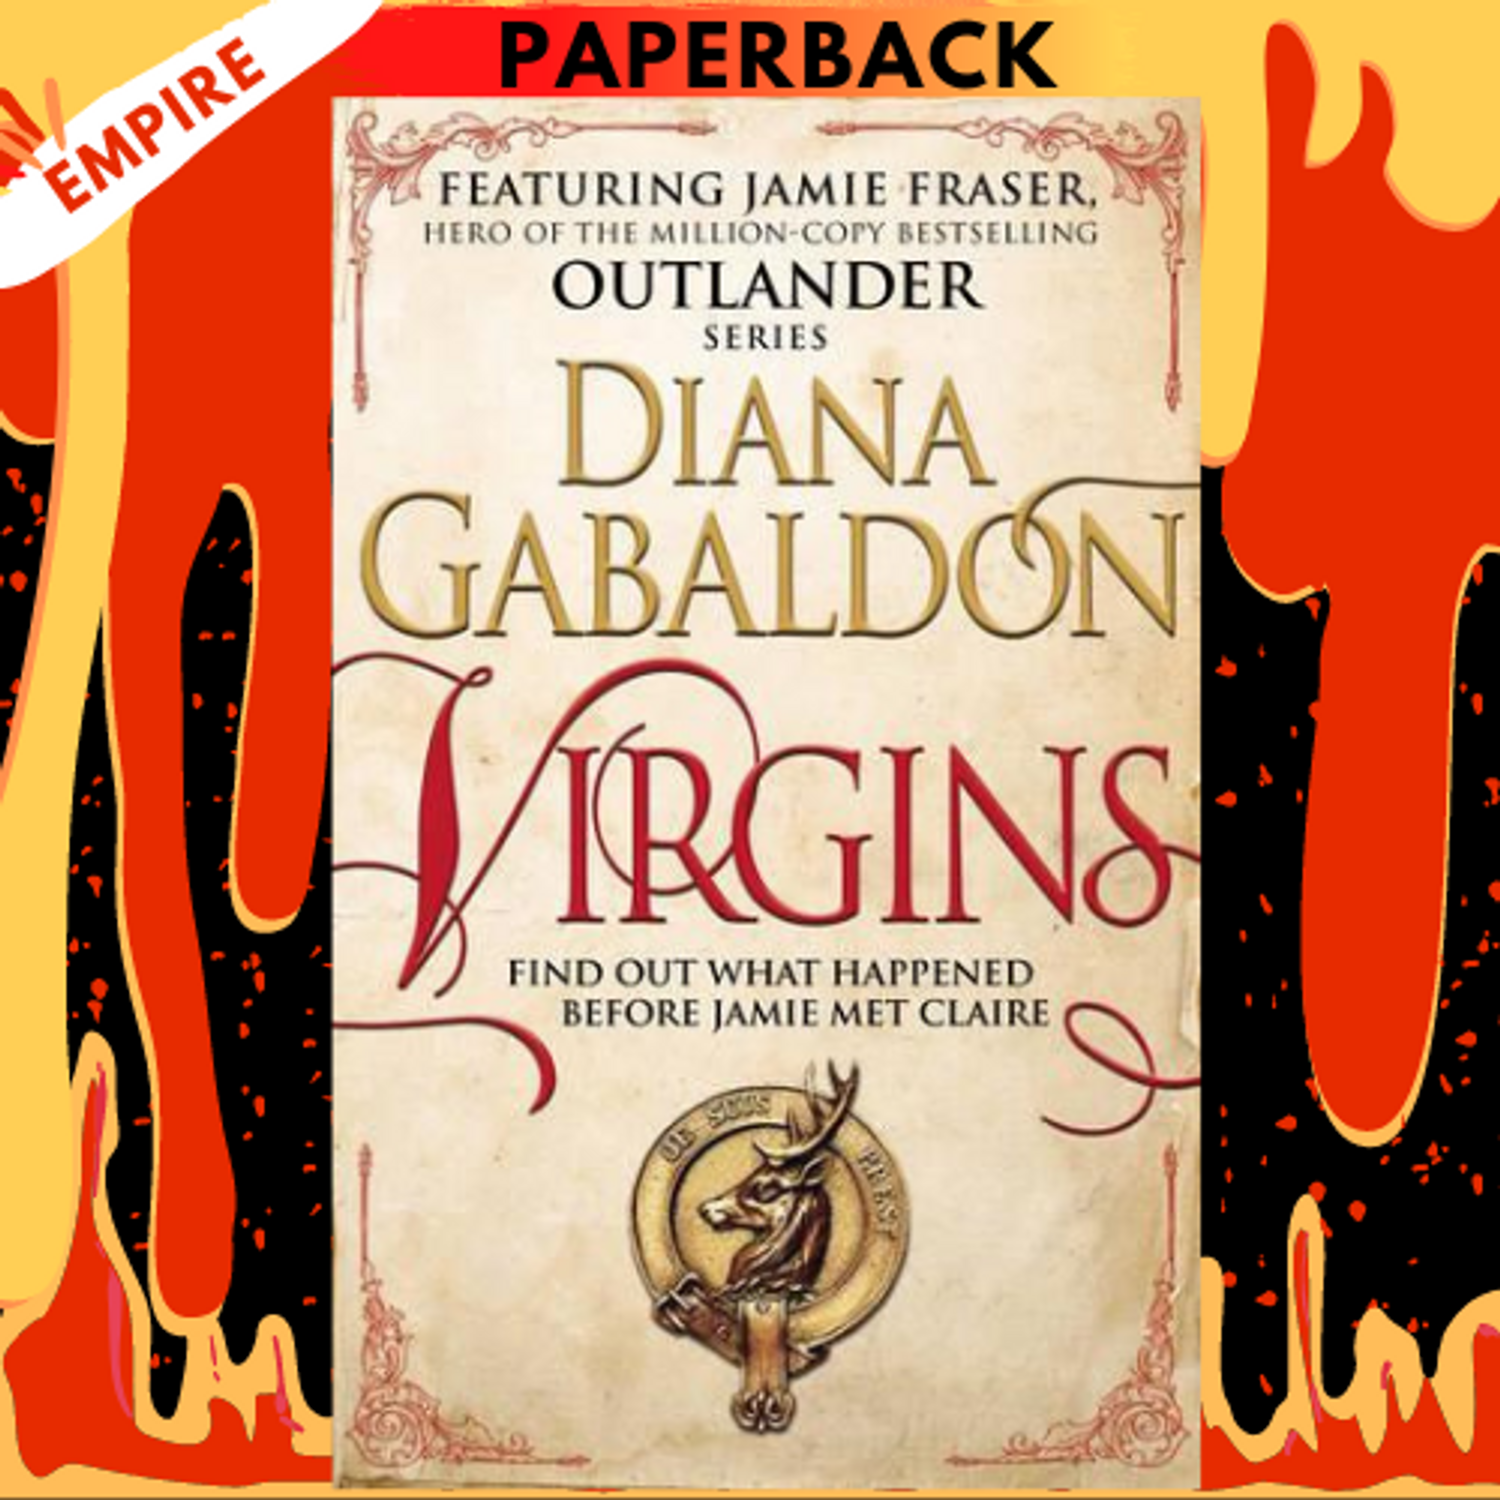 Virgins: An Outlander Novella